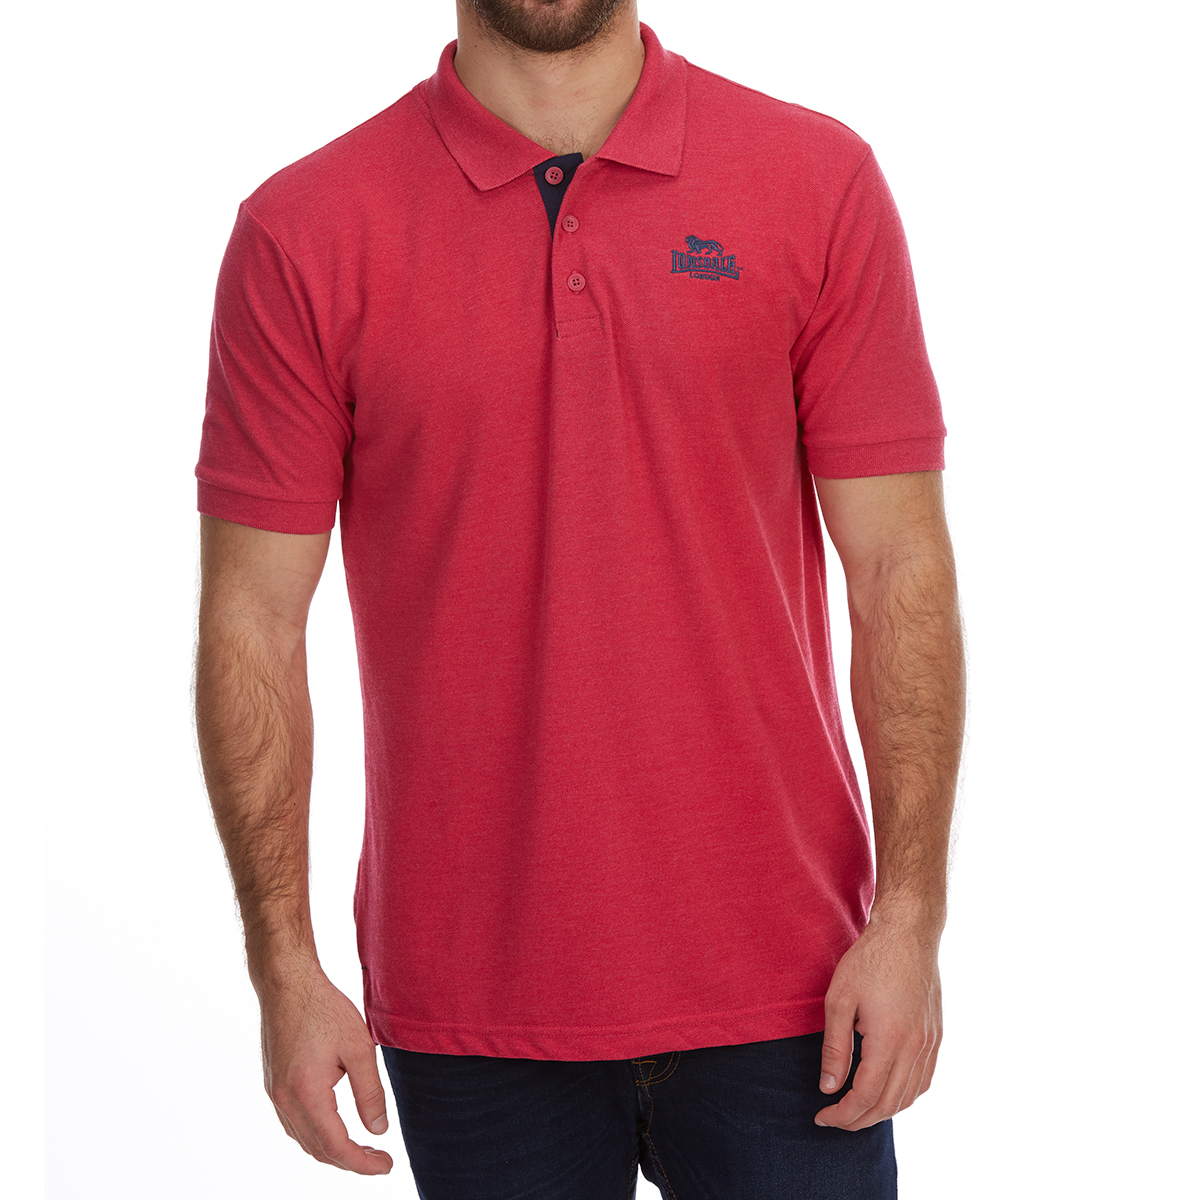 Lonsdale Men's Short-Sleeve Plain Polo Shirt - Red, L